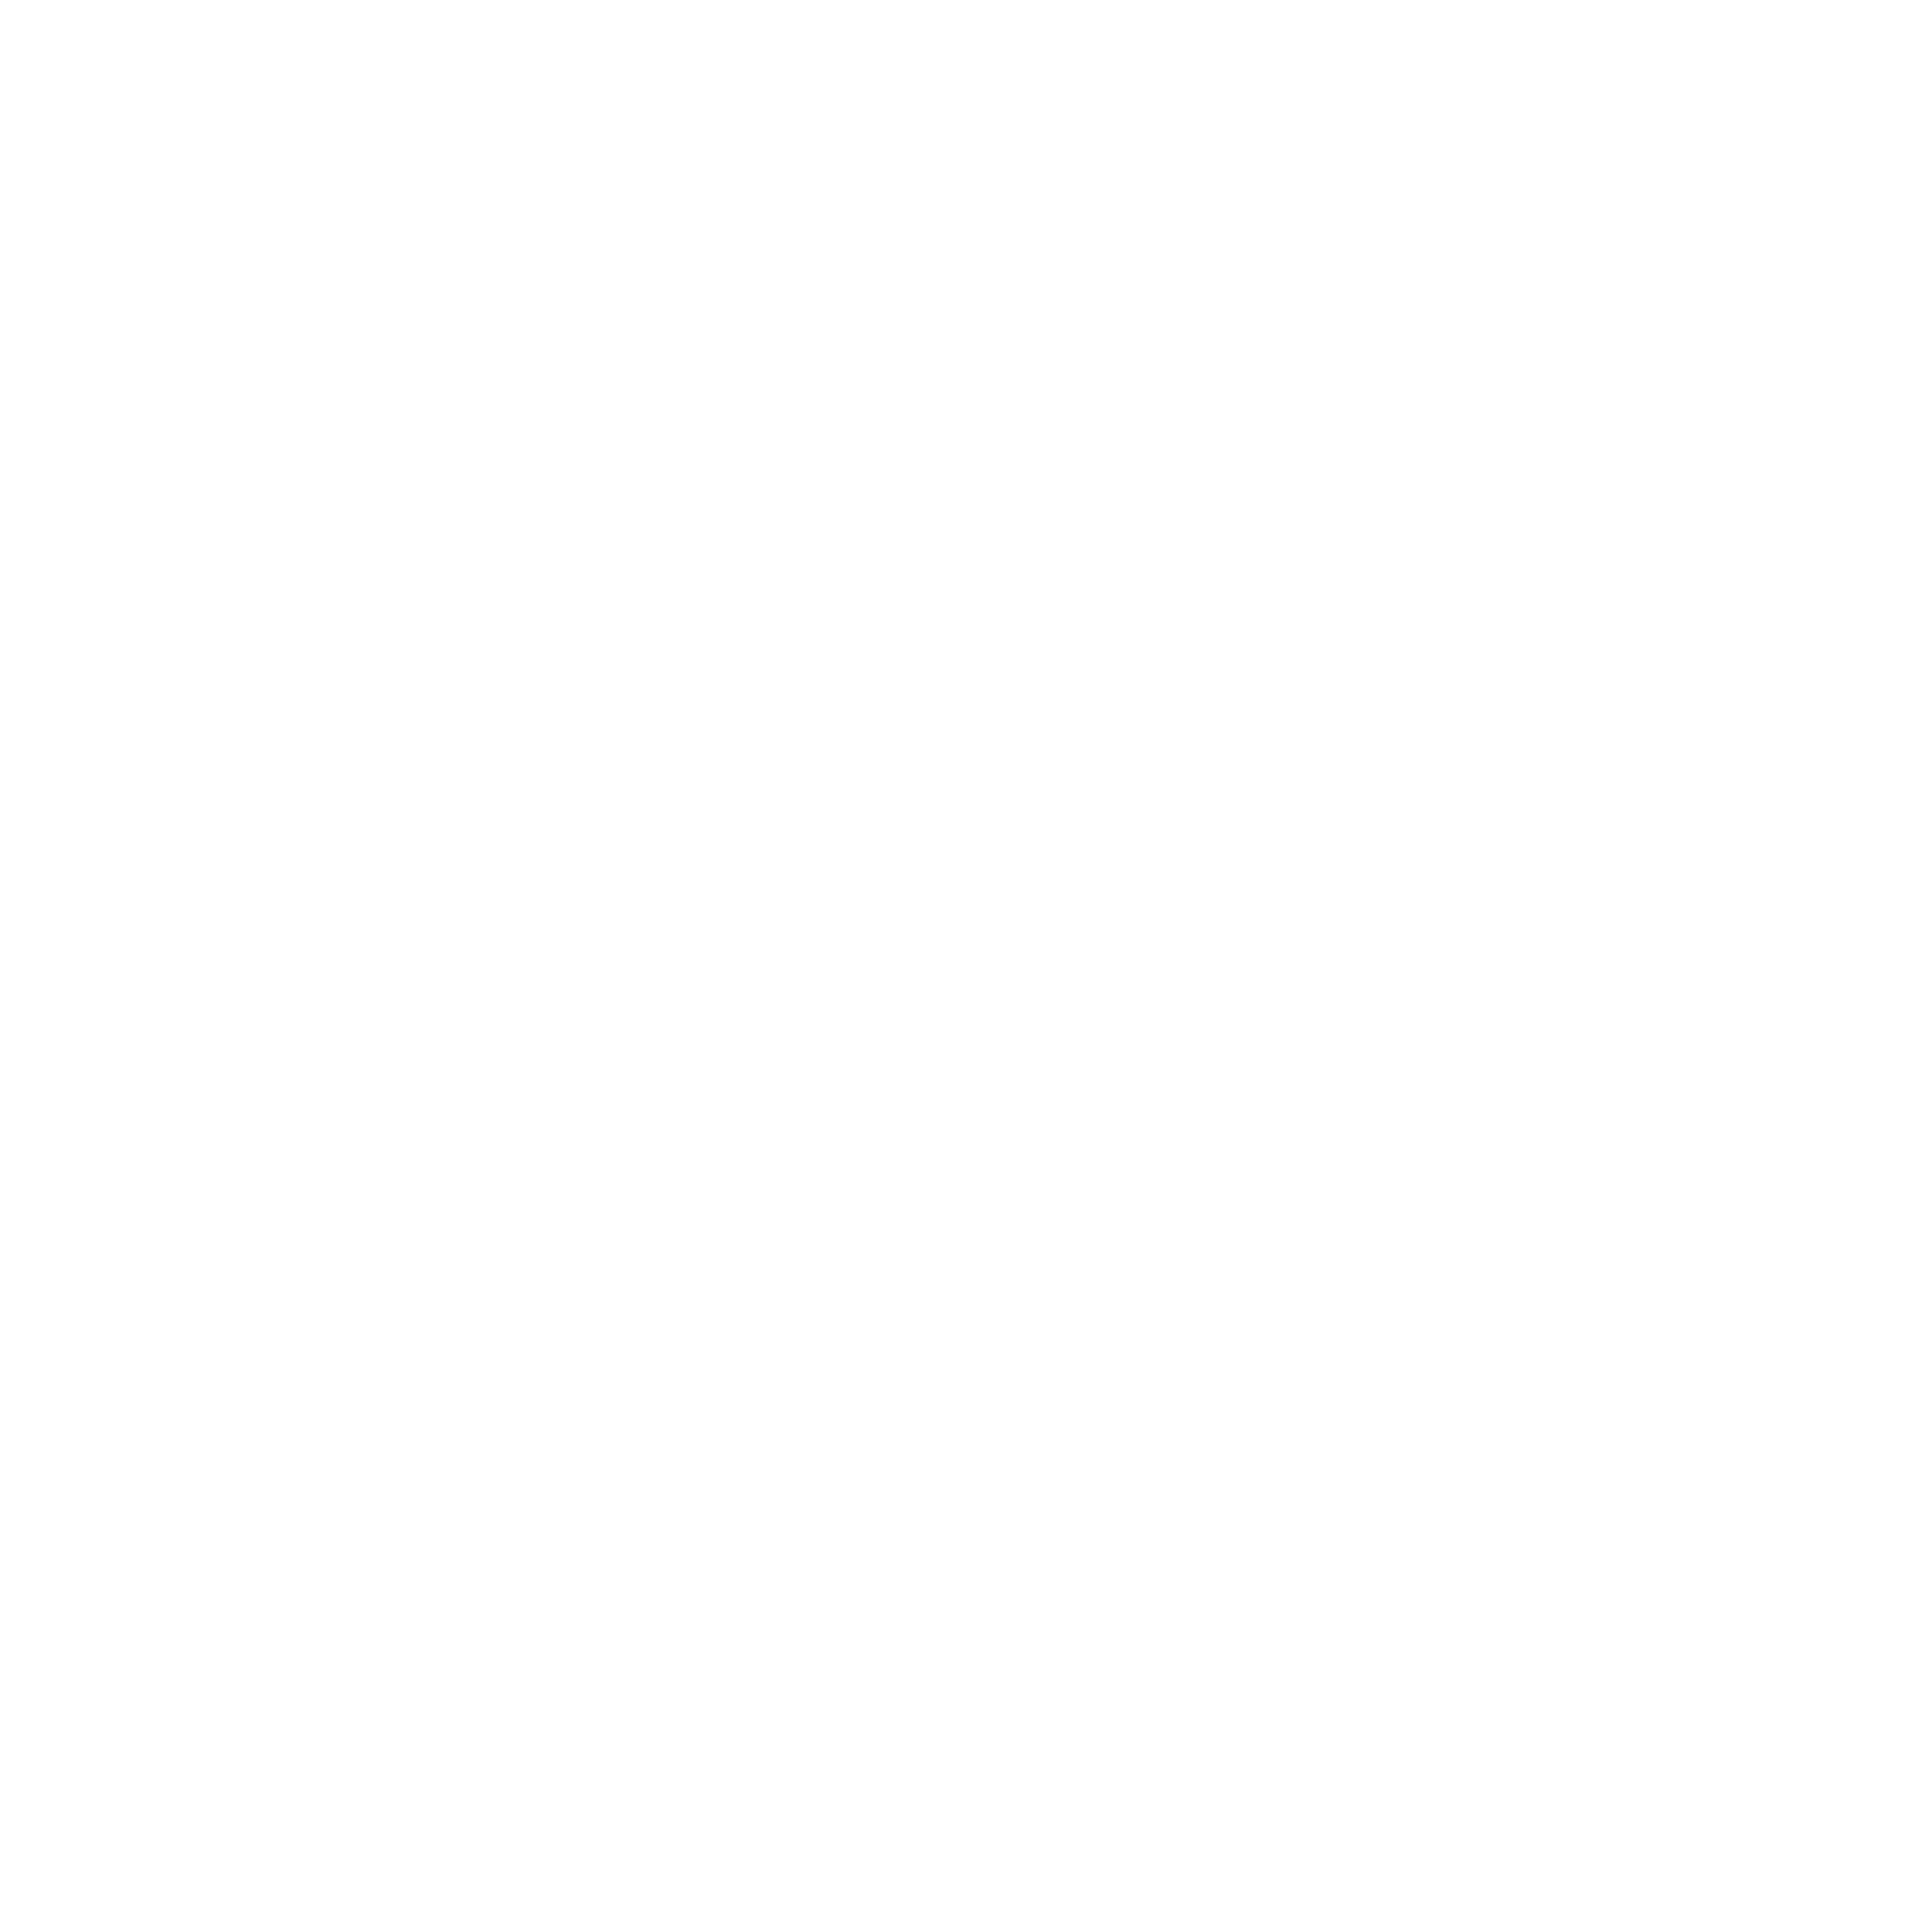 RHODE ISLAND REEF